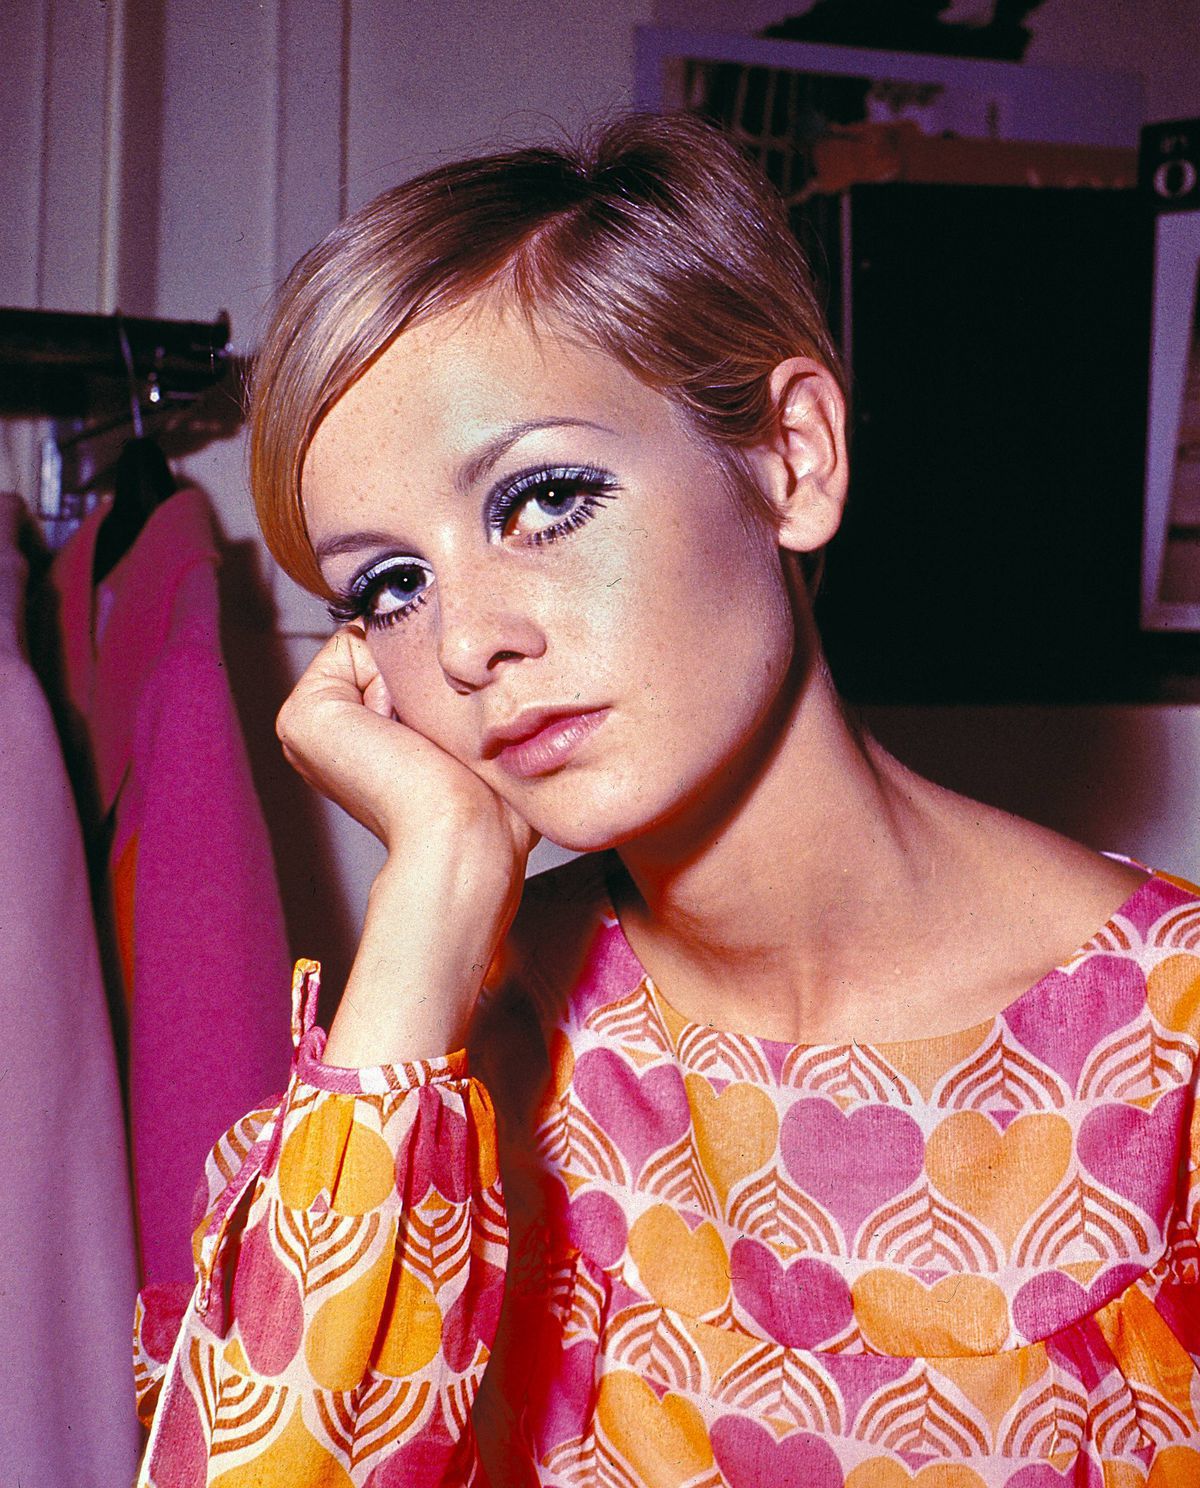 Záber z roku 1967 - typický vzhľad topmodelky...